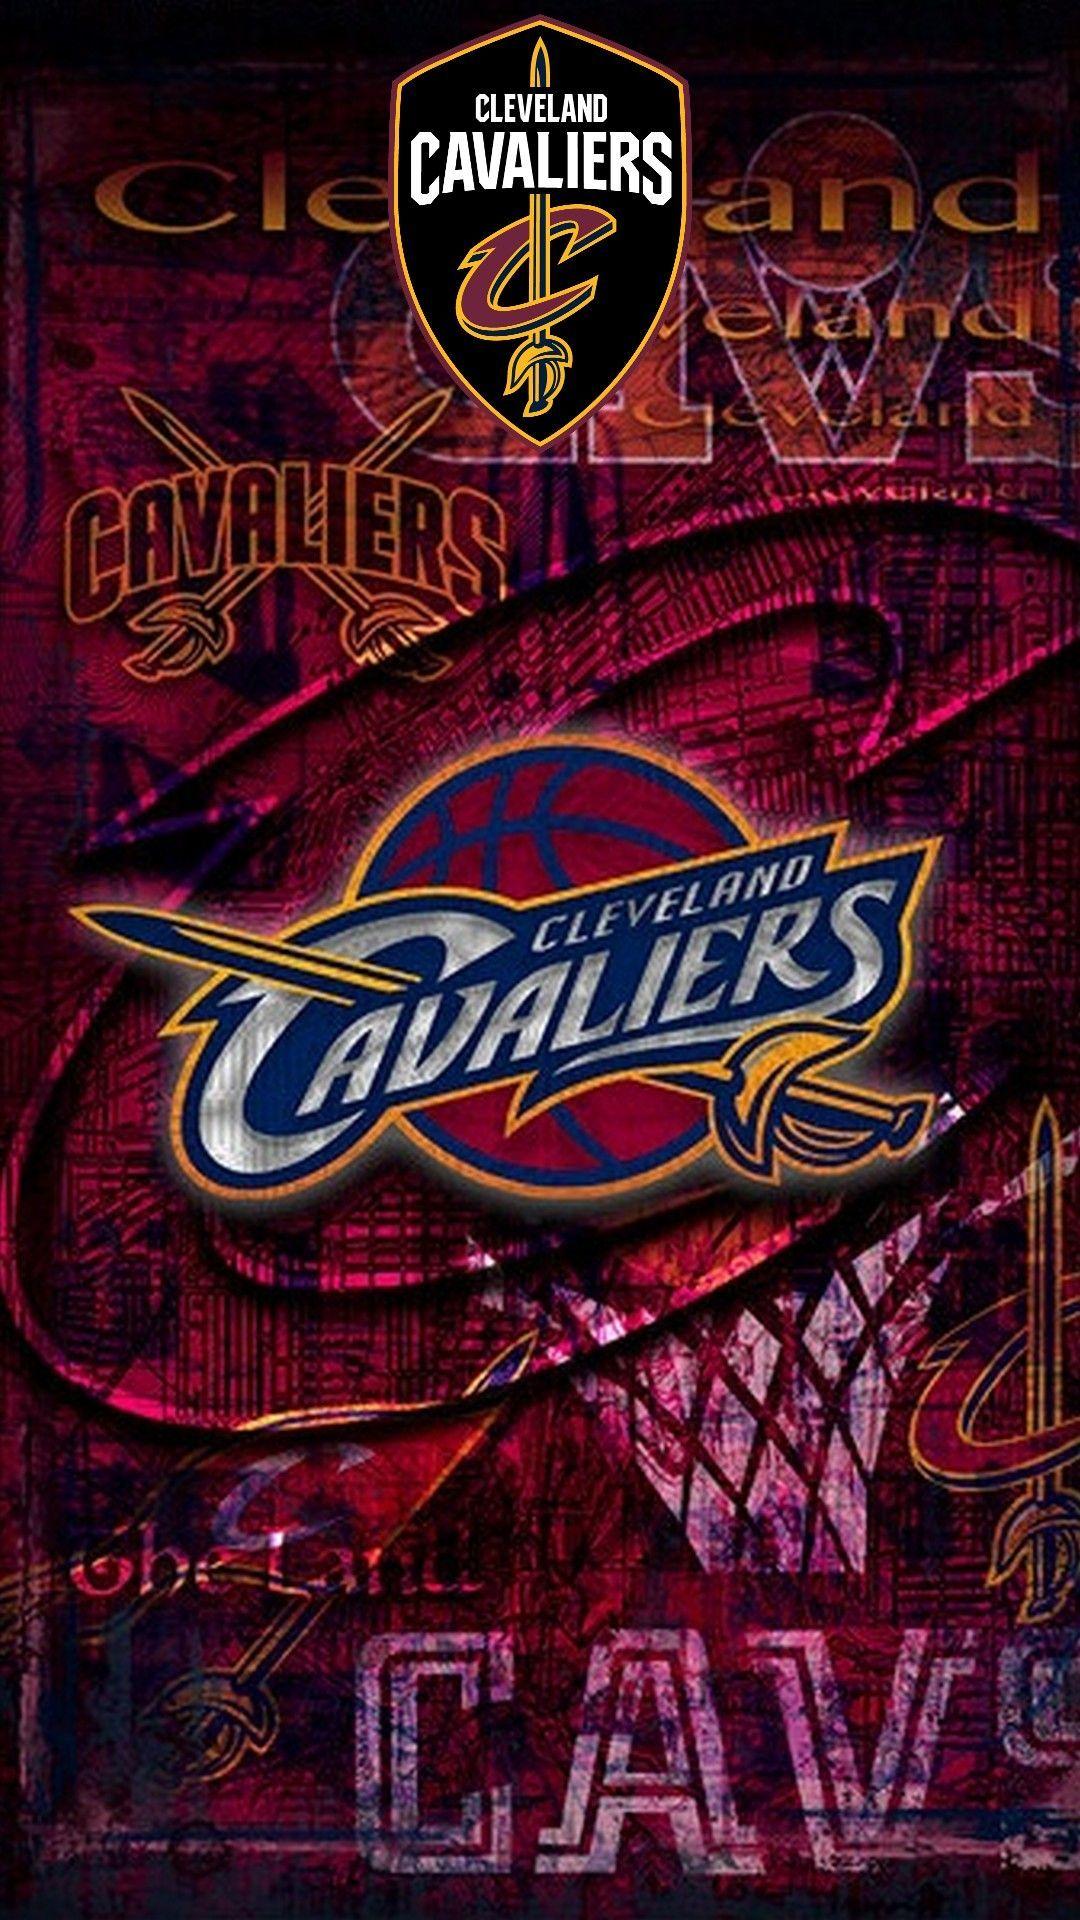 Cleveland Cavaliers Wallpaper iPhone HD. Cavaliers wallpaper